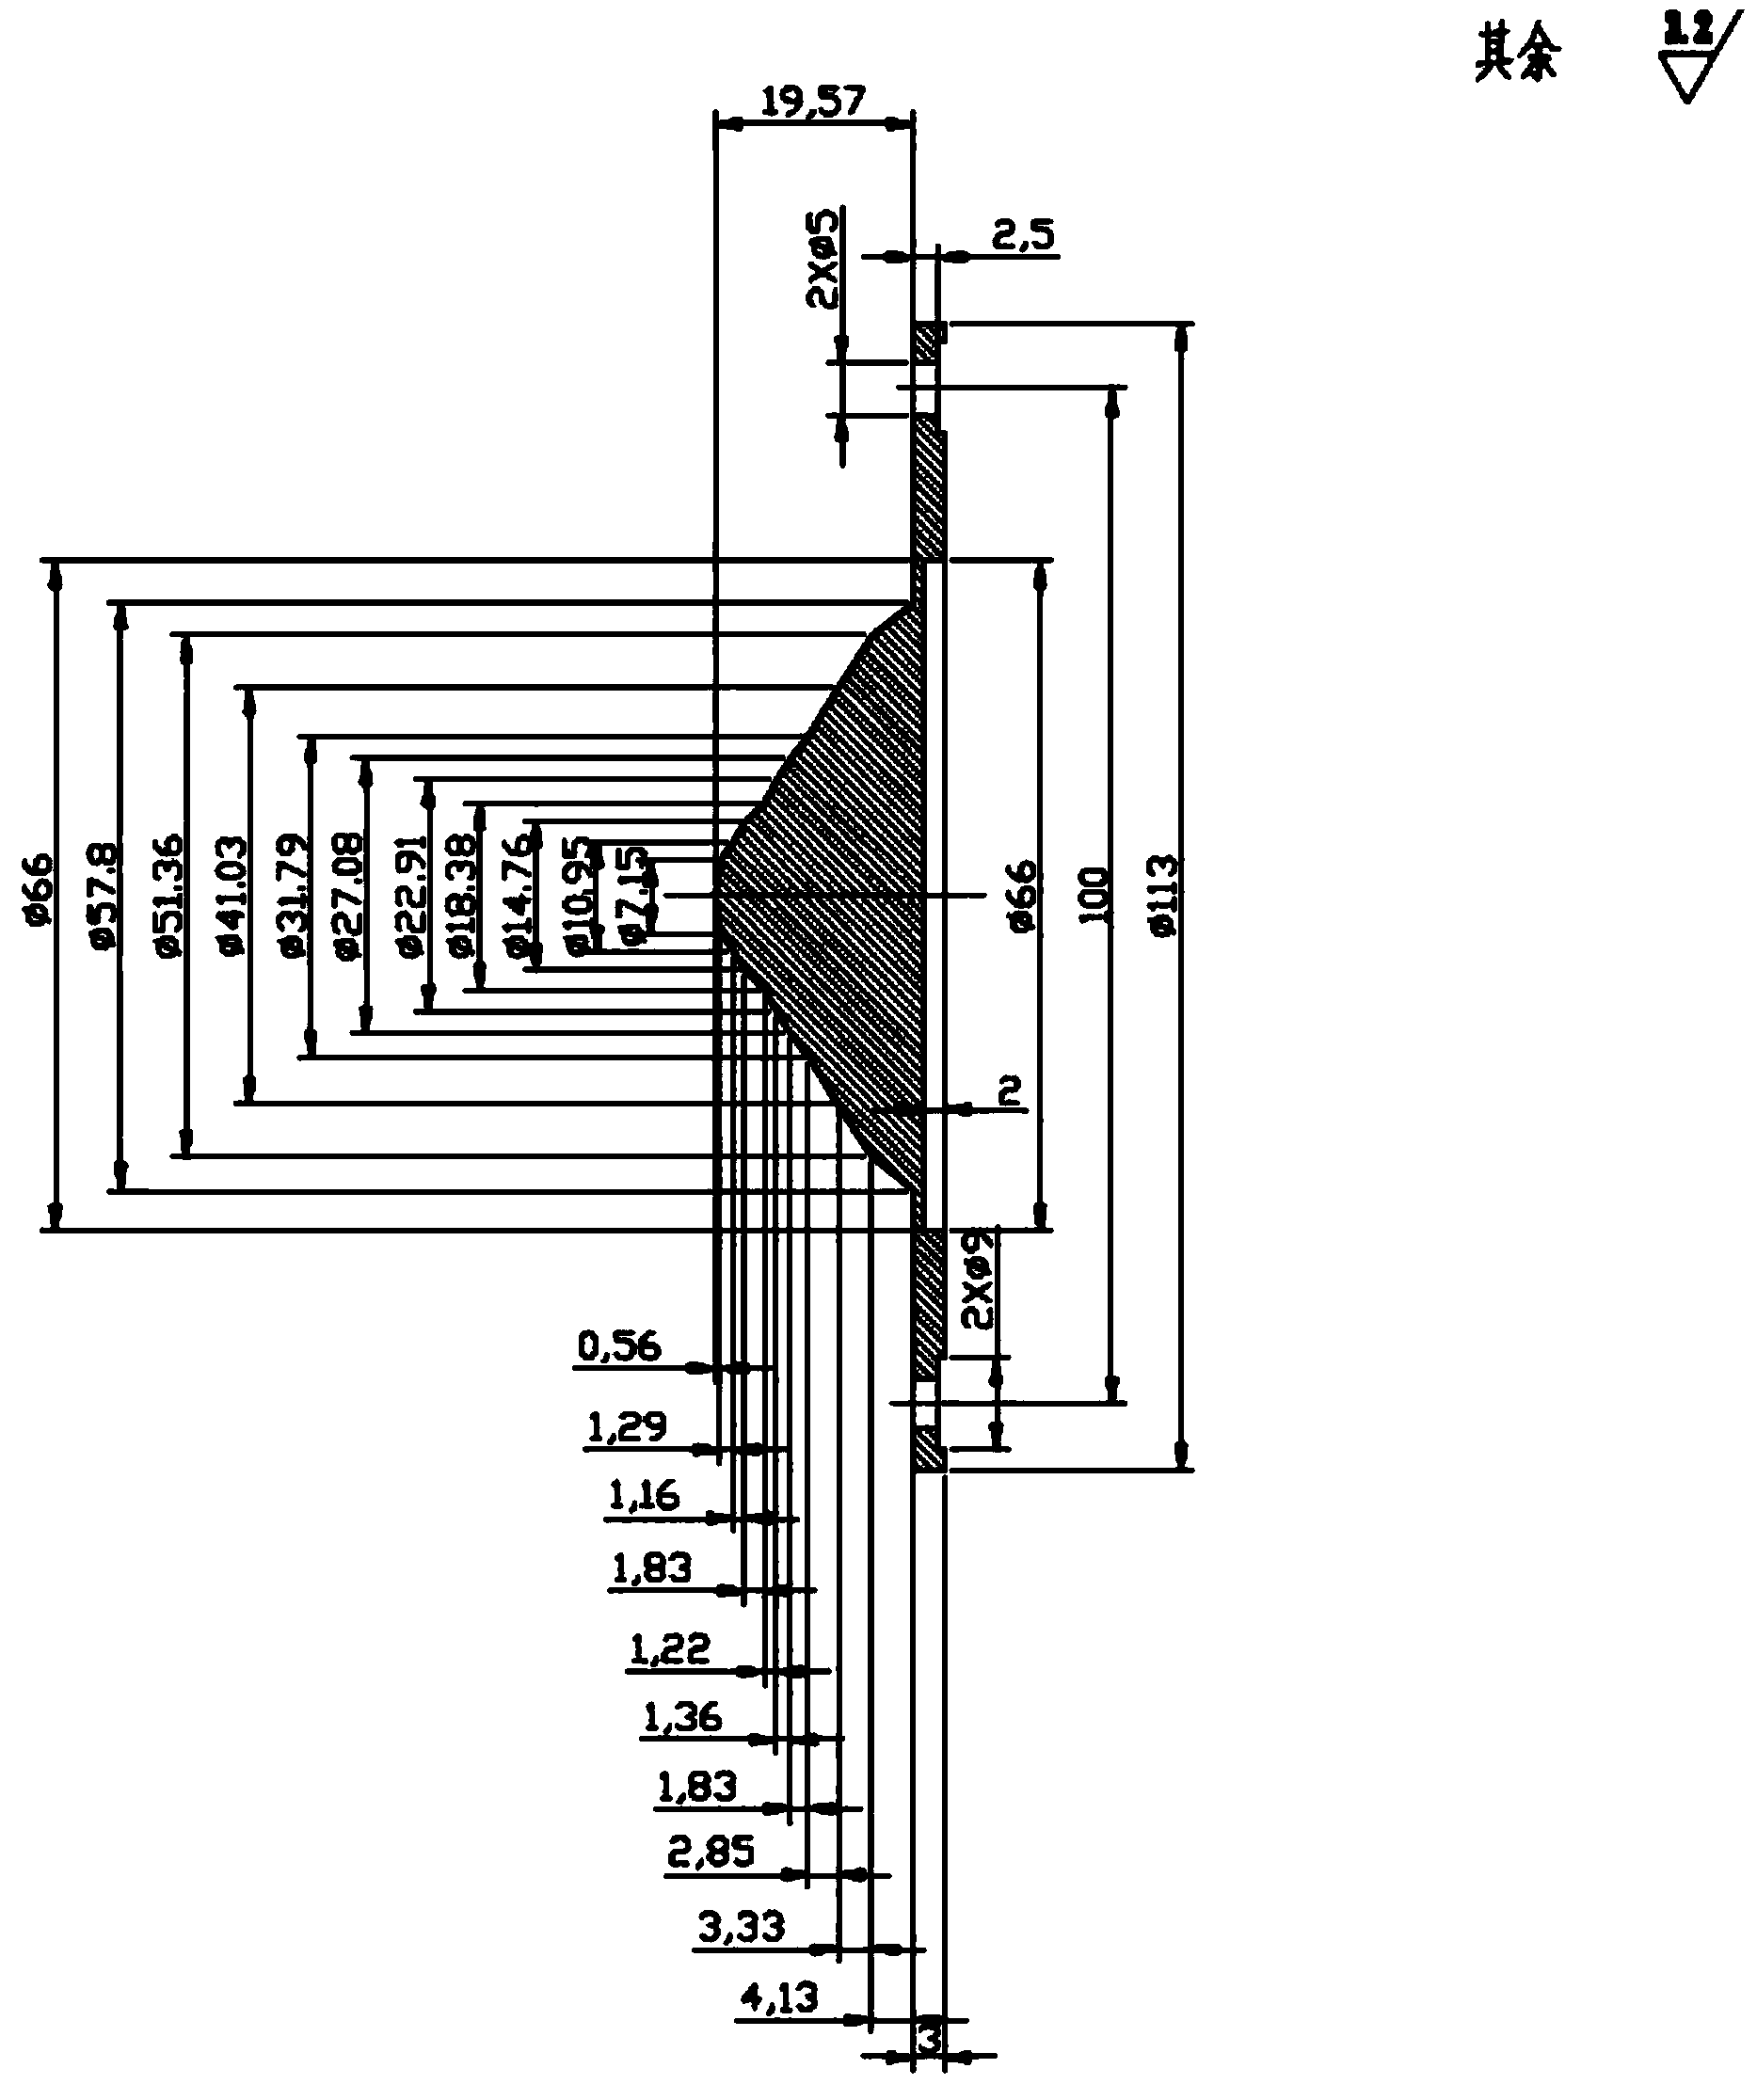 Design method of X-ray flattening filter